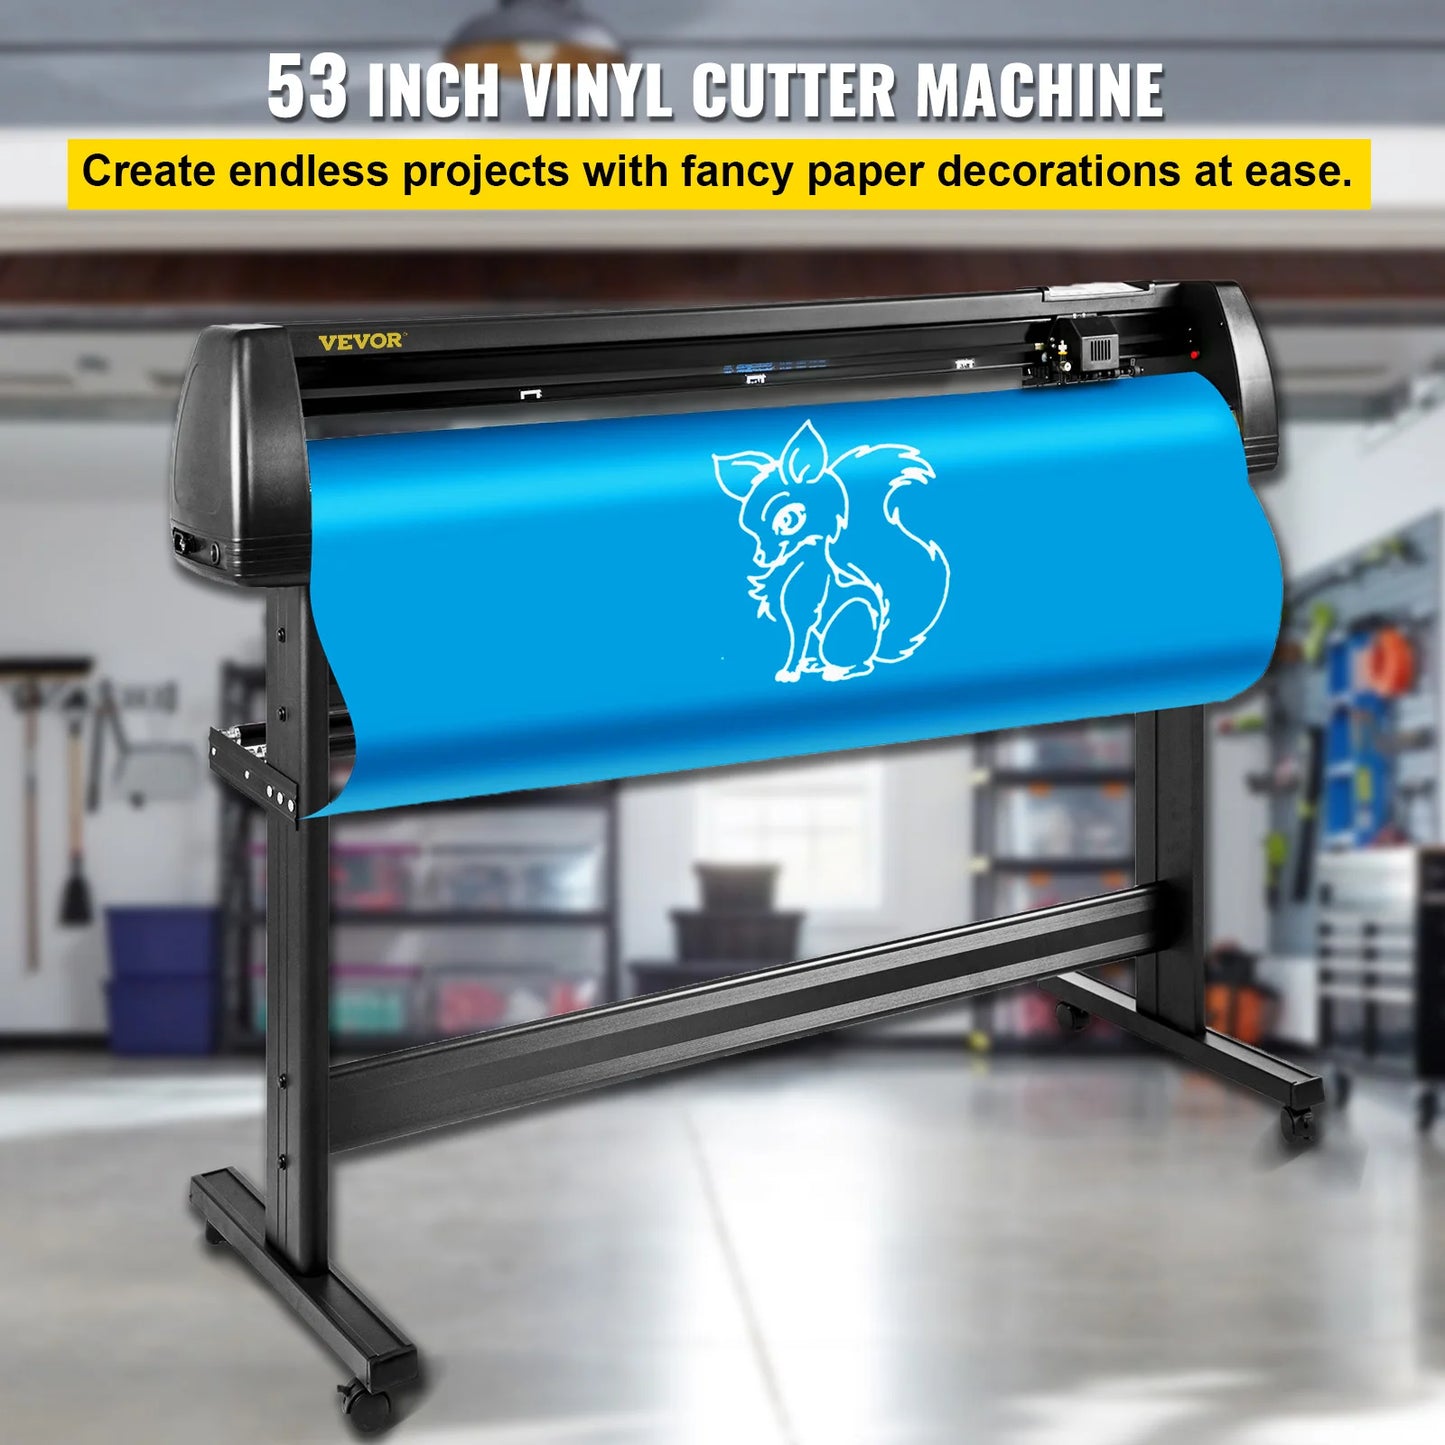 VEVOR 53 Inch Vinyl Cutter Plotter Machine Vinyl Cutting Plotter Signmaster LCD Screen for DIY Advertising Label Making